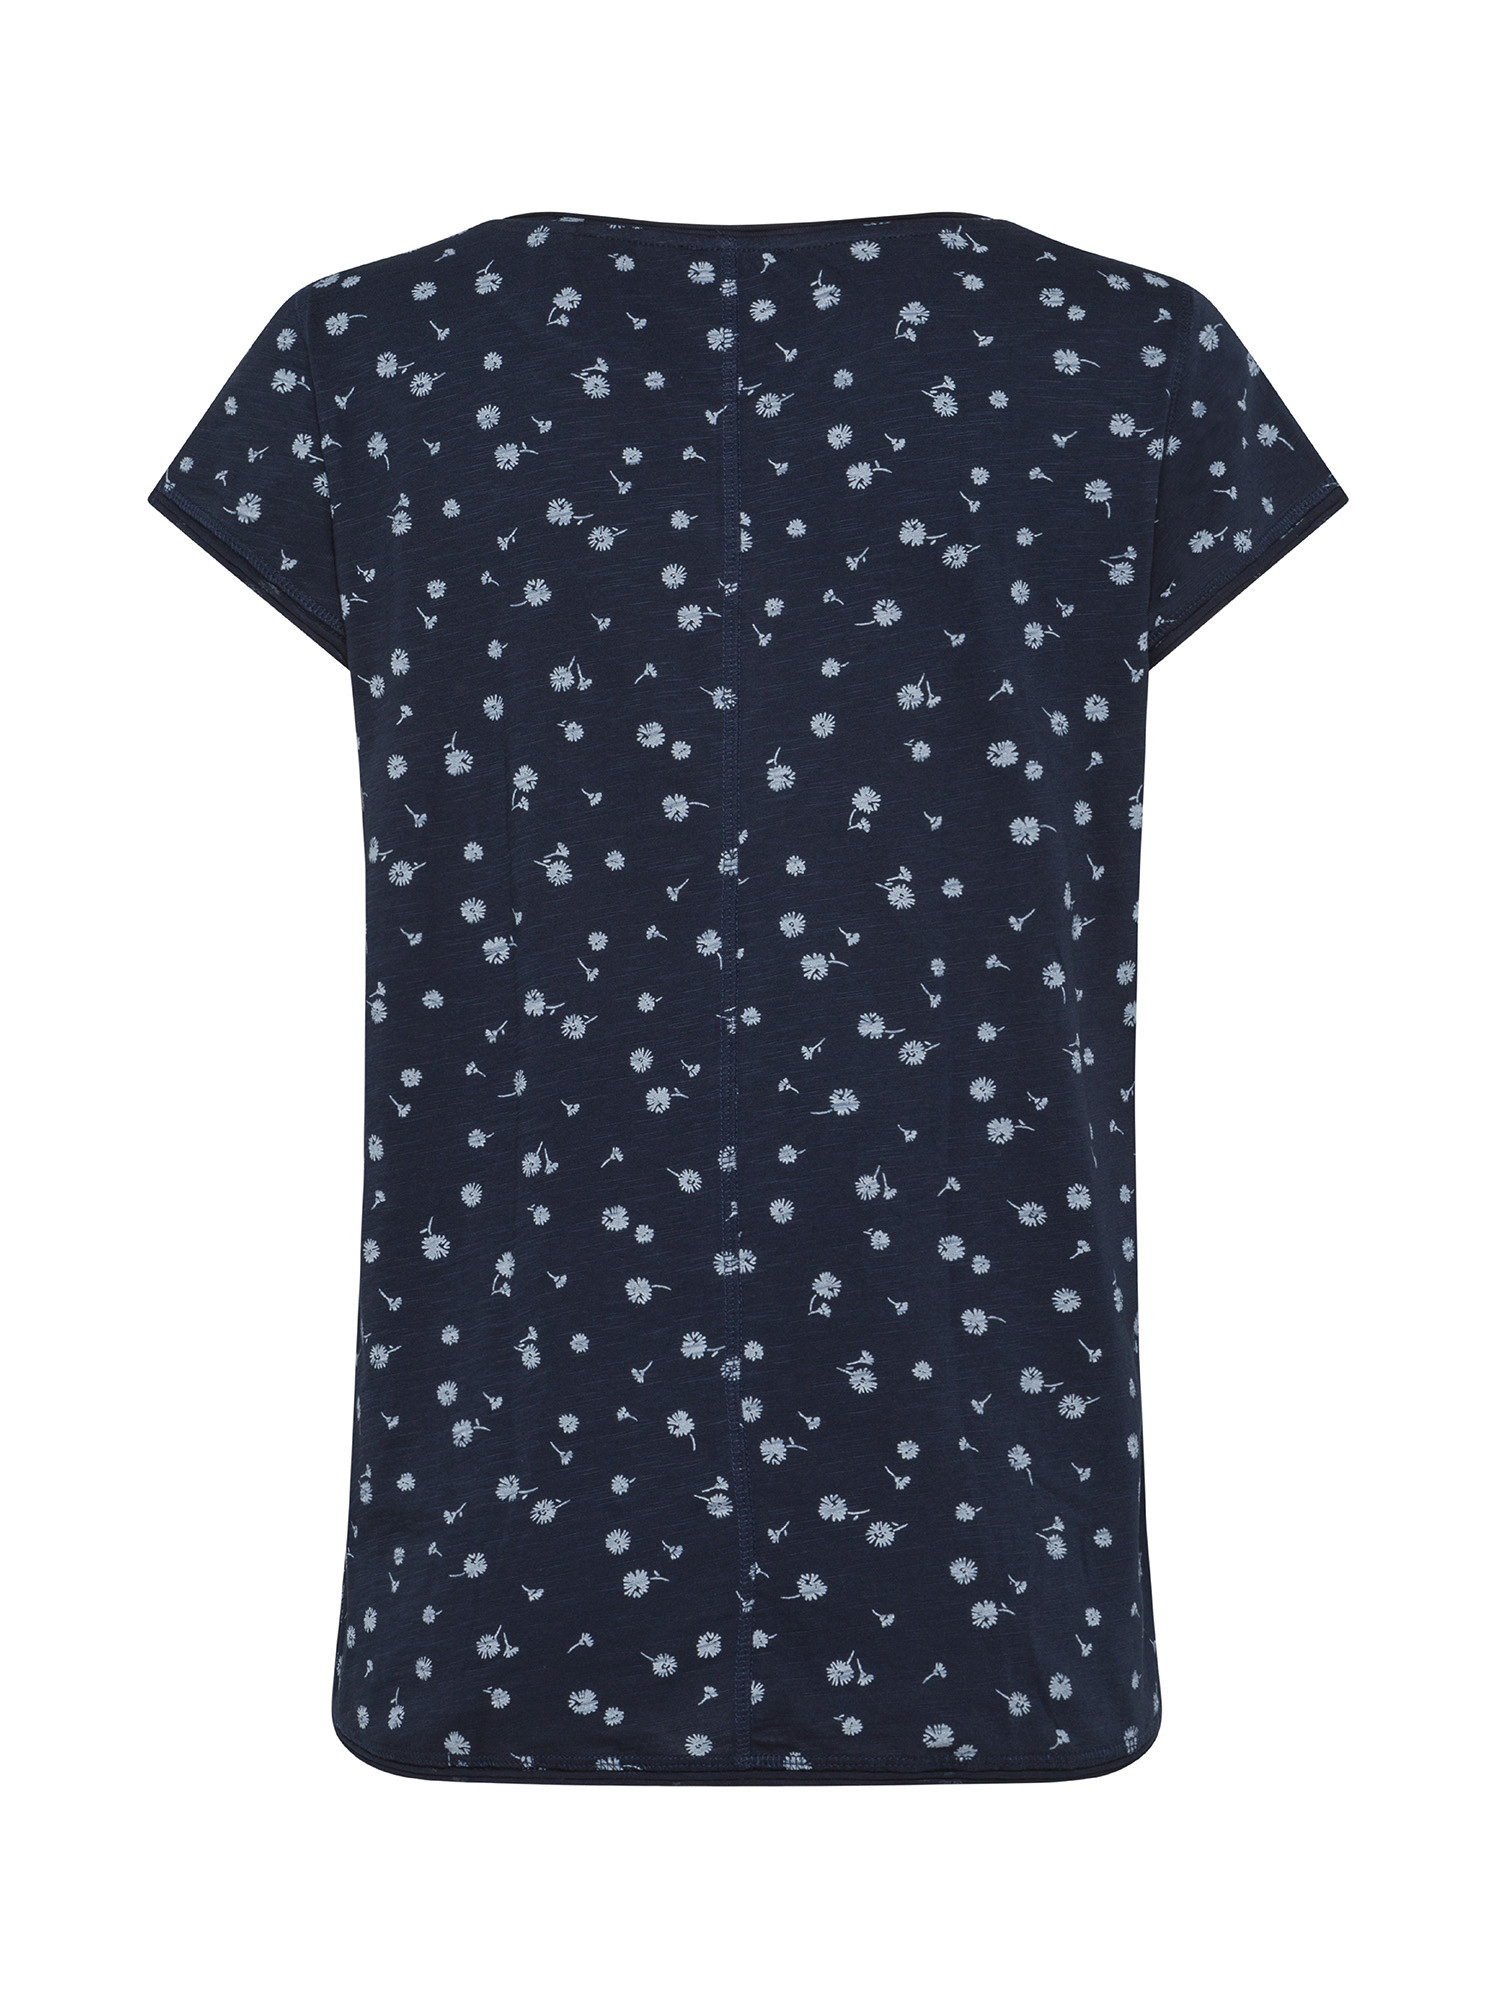 Esprit - T-shirt with print, Dark Blue, large image number 1